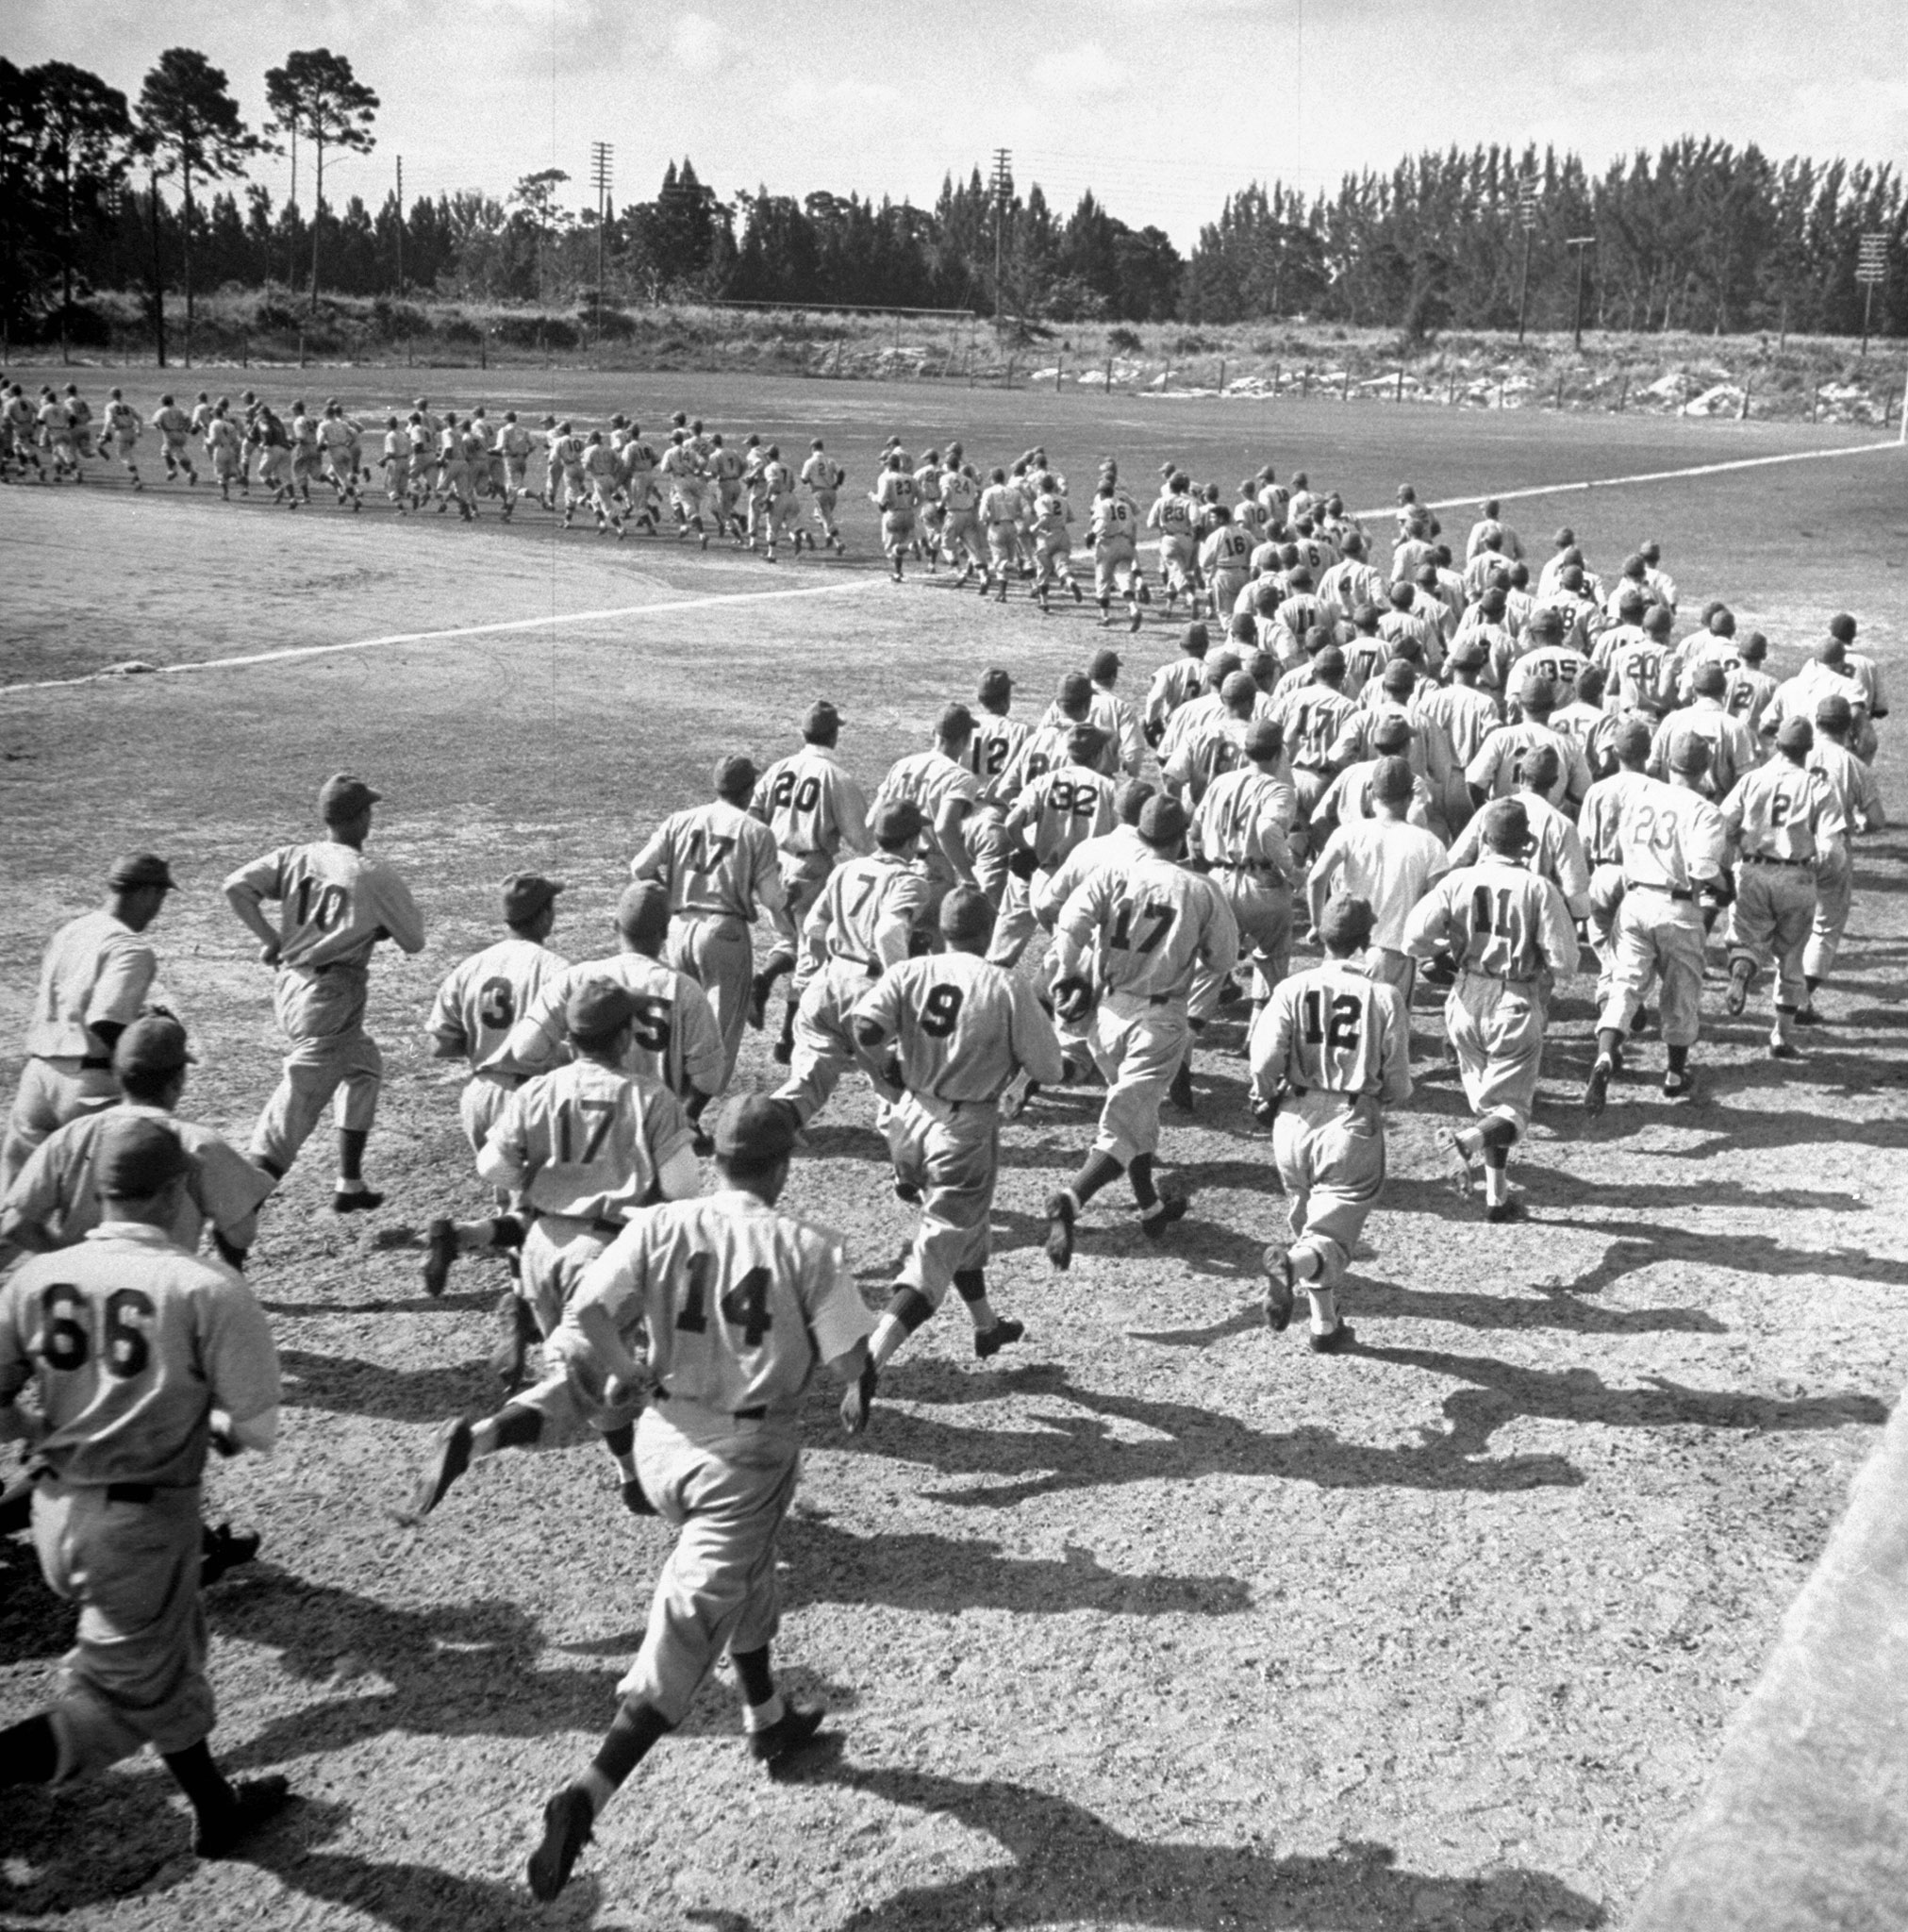 Dodger prospects, Dodgertown, Fla., 1948.